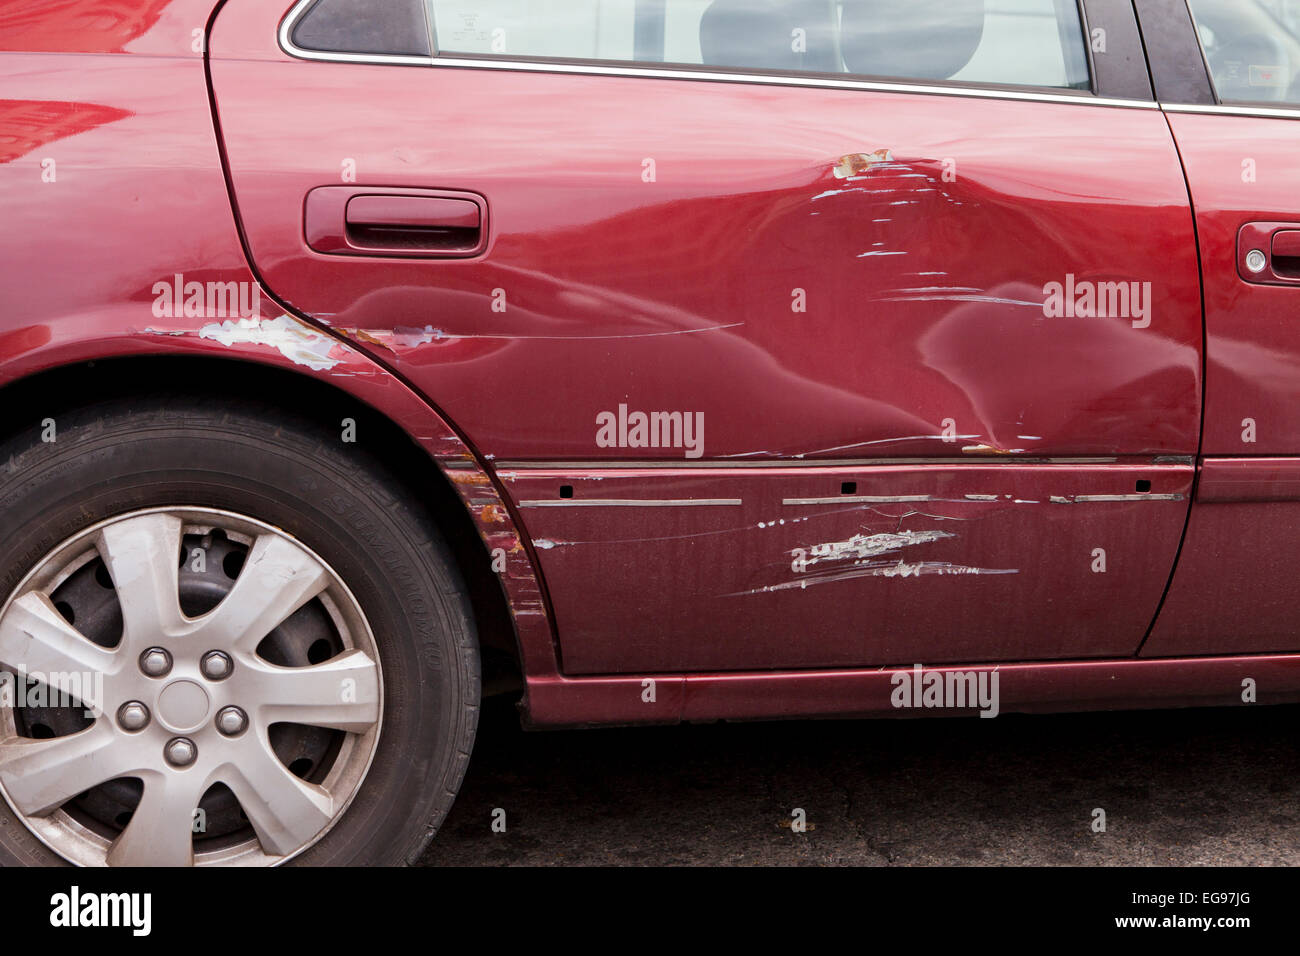 Puerta de coche abollada fotografías e imágenes de alta resolución - Alamy